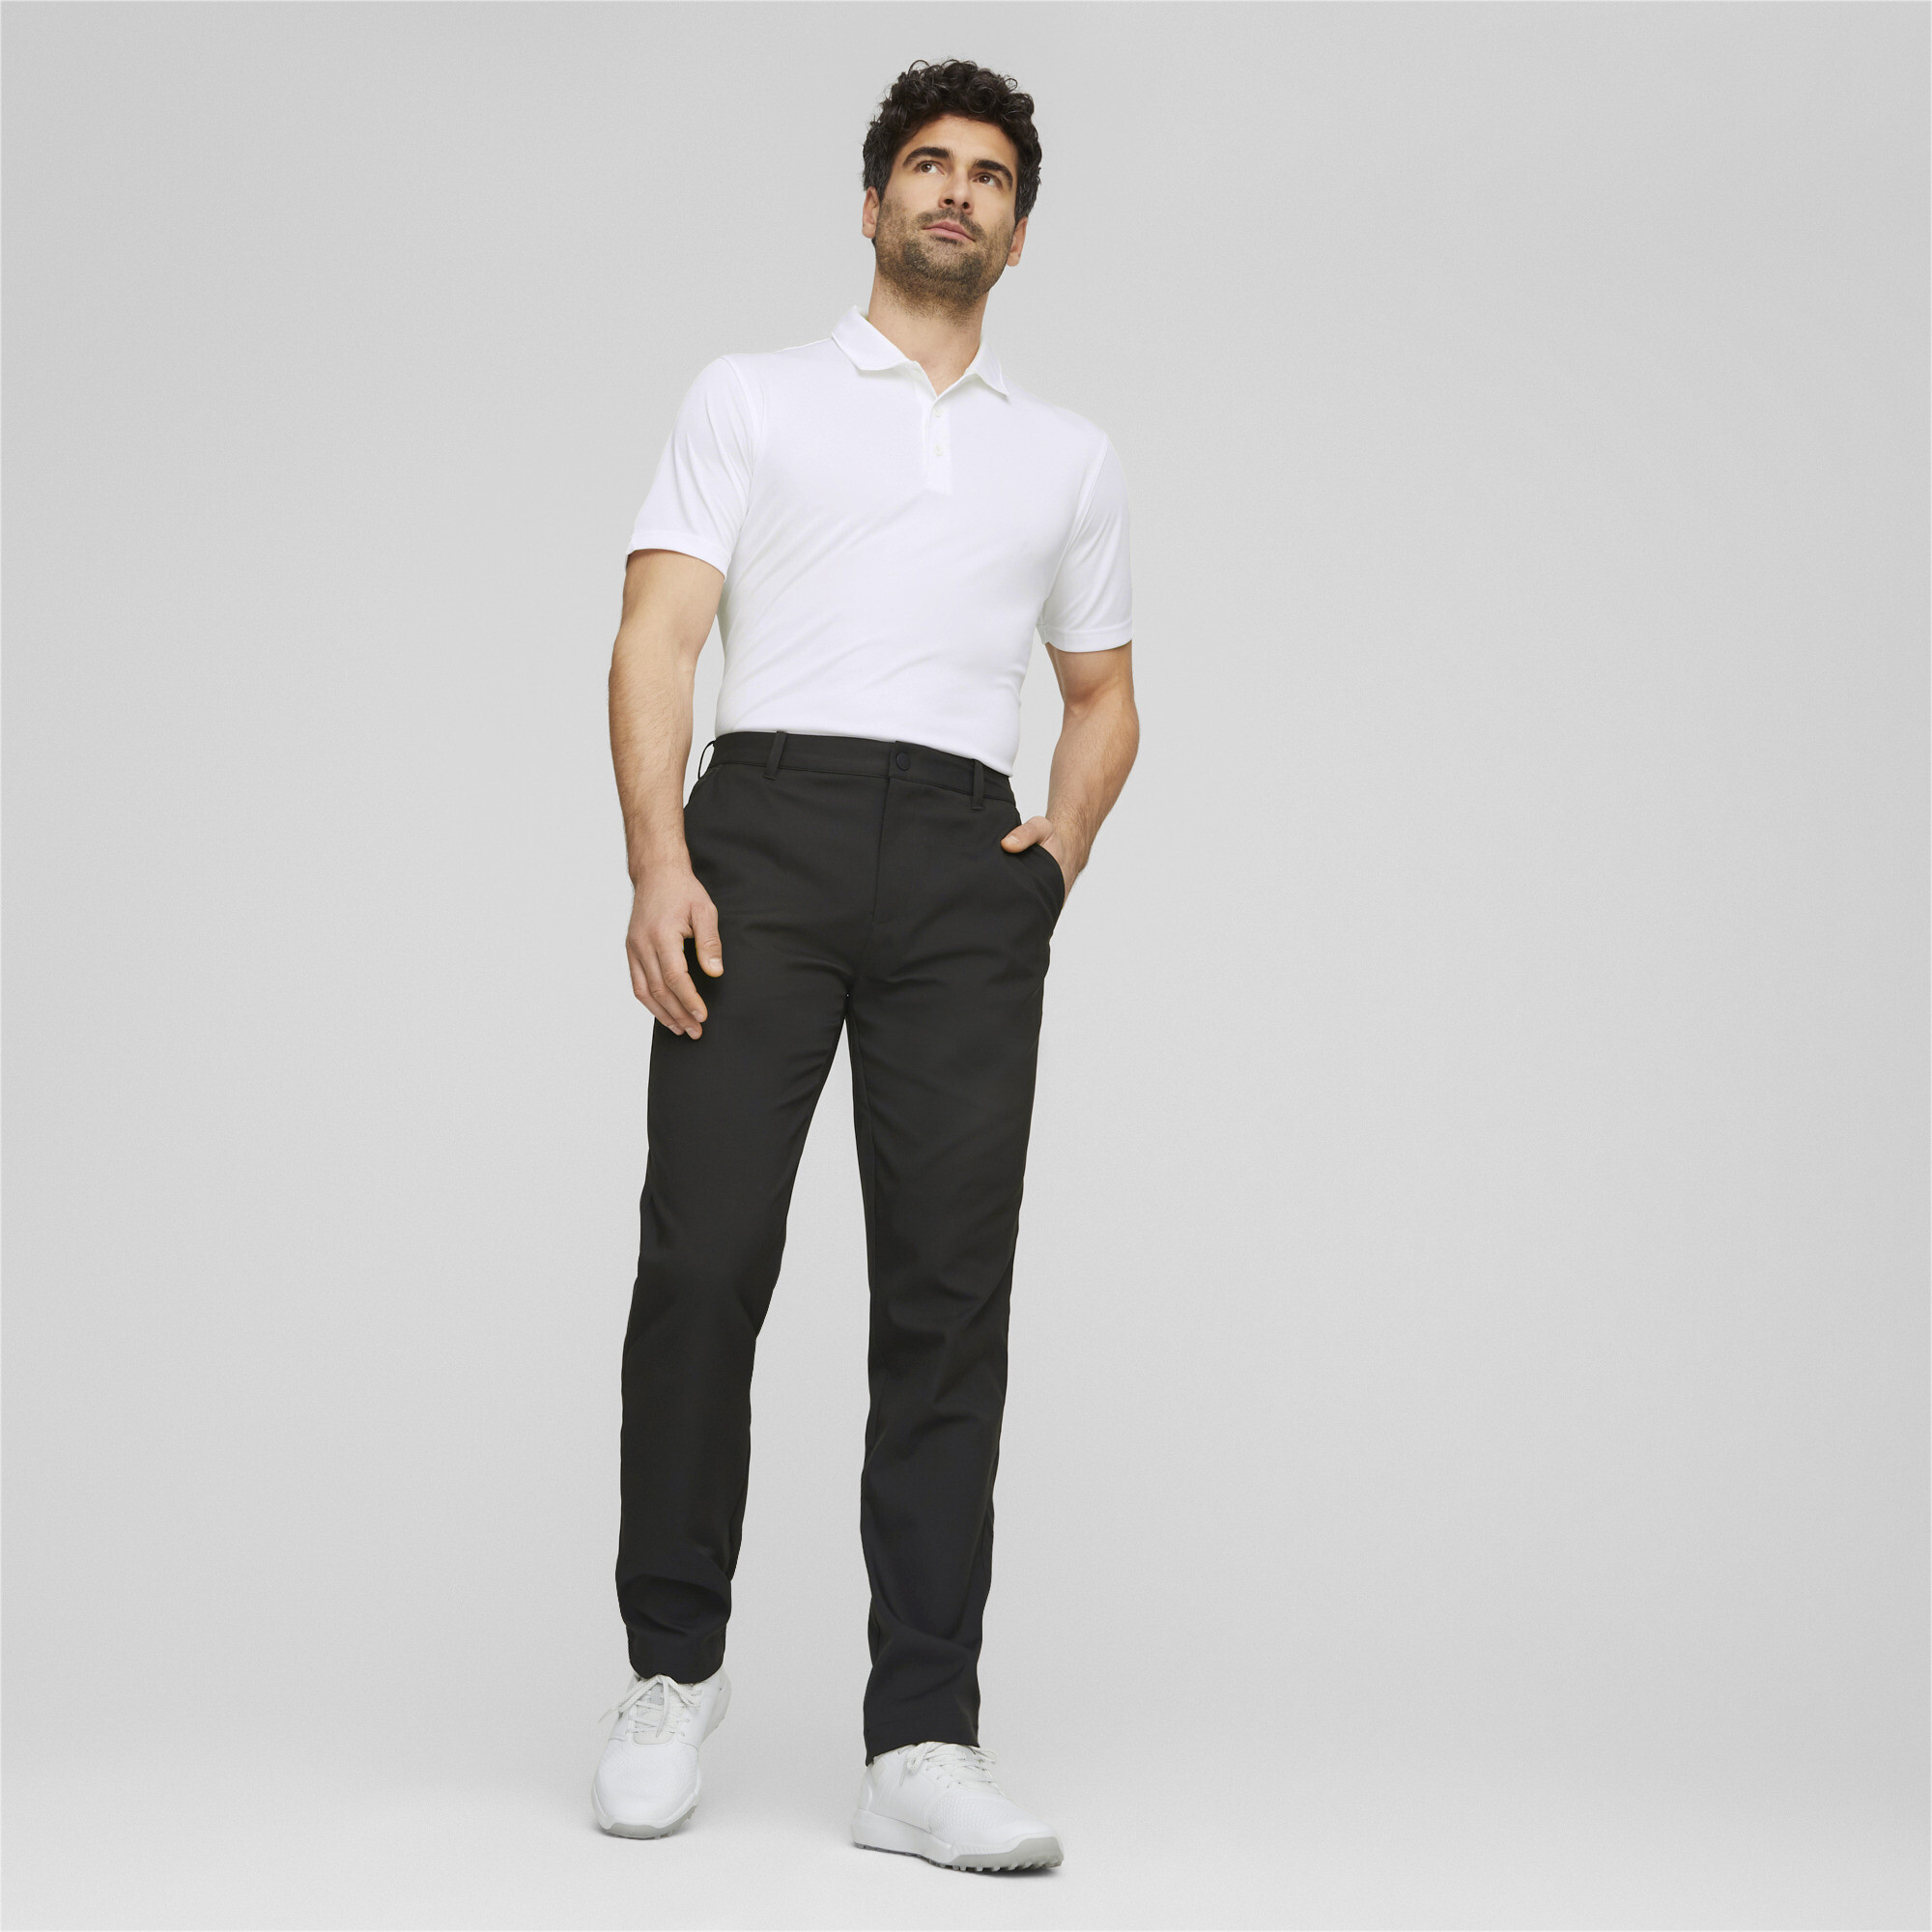 Men's Puma Dealer Golf Pants, Black, Size 33/30, Clothing